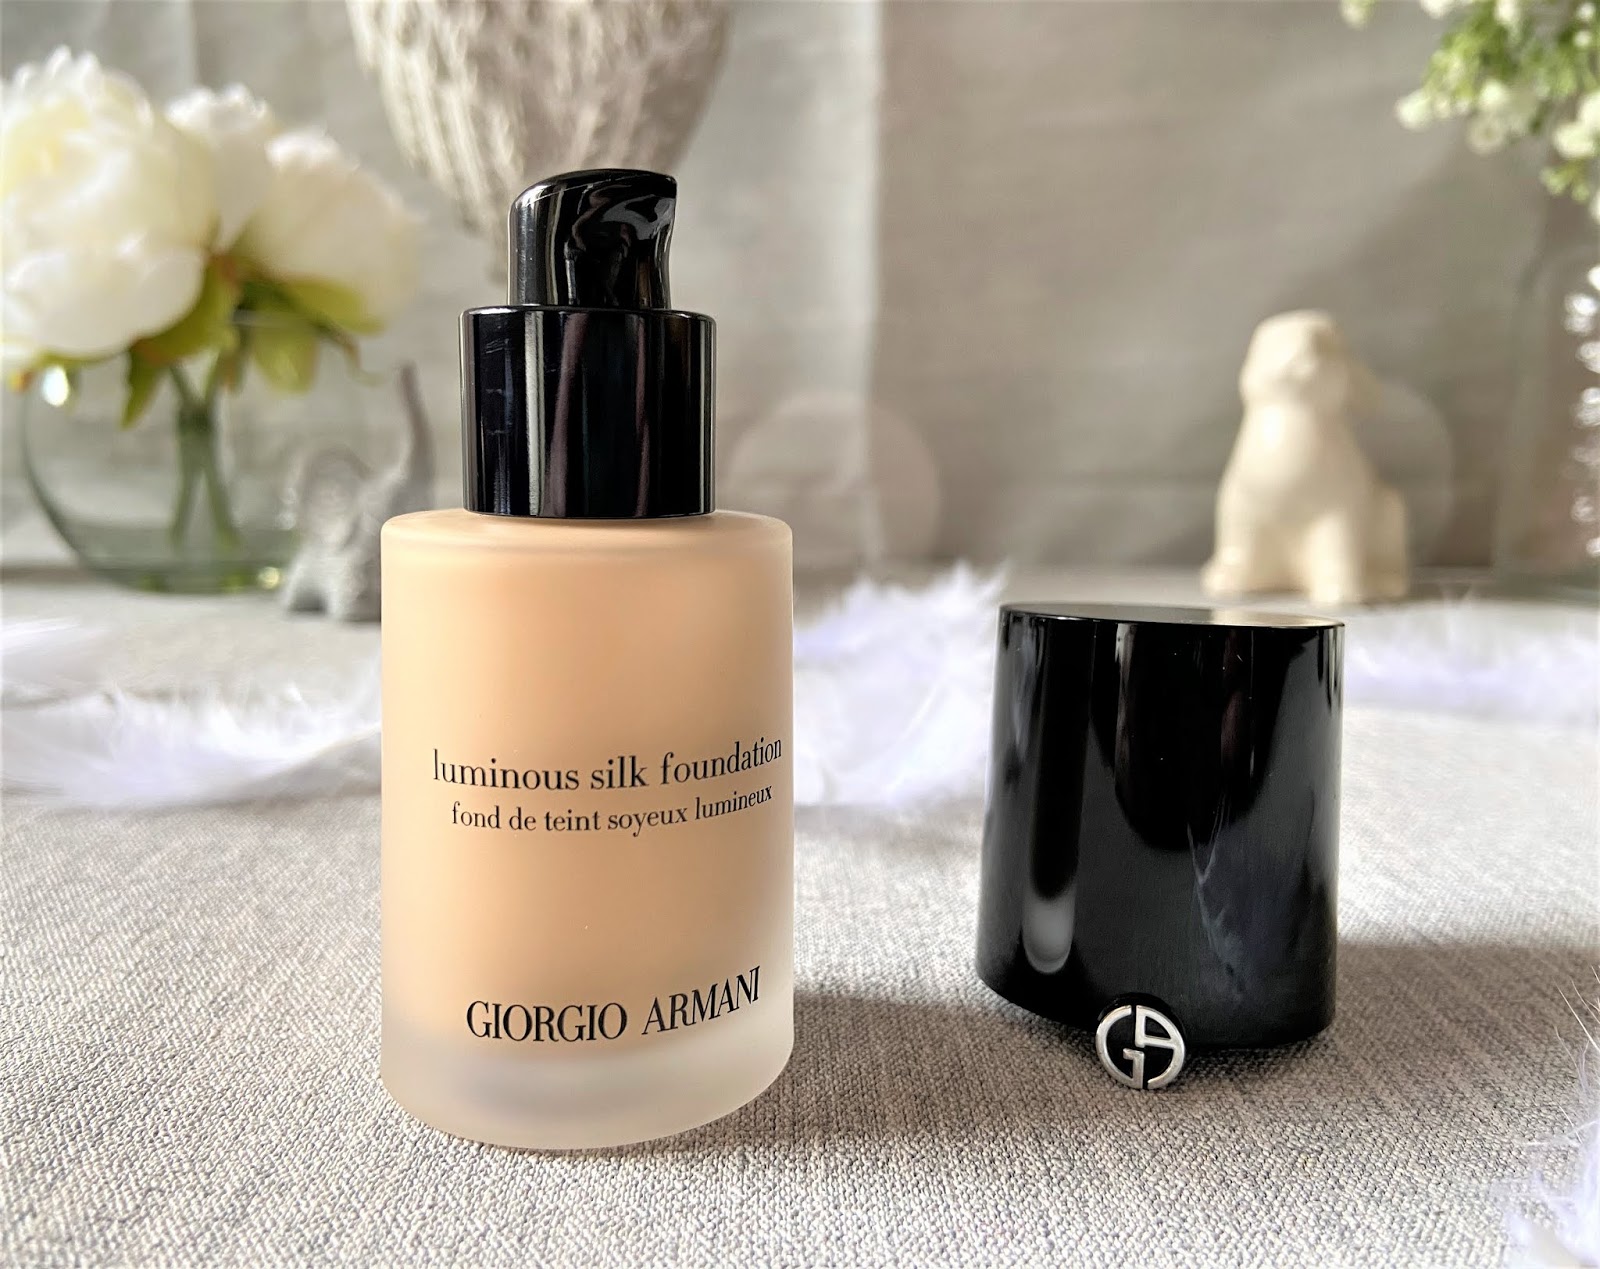 Giorgio Armani Luminous Silk Foundation & Luminous Silk Concealer Review |  Kathryn's Loves